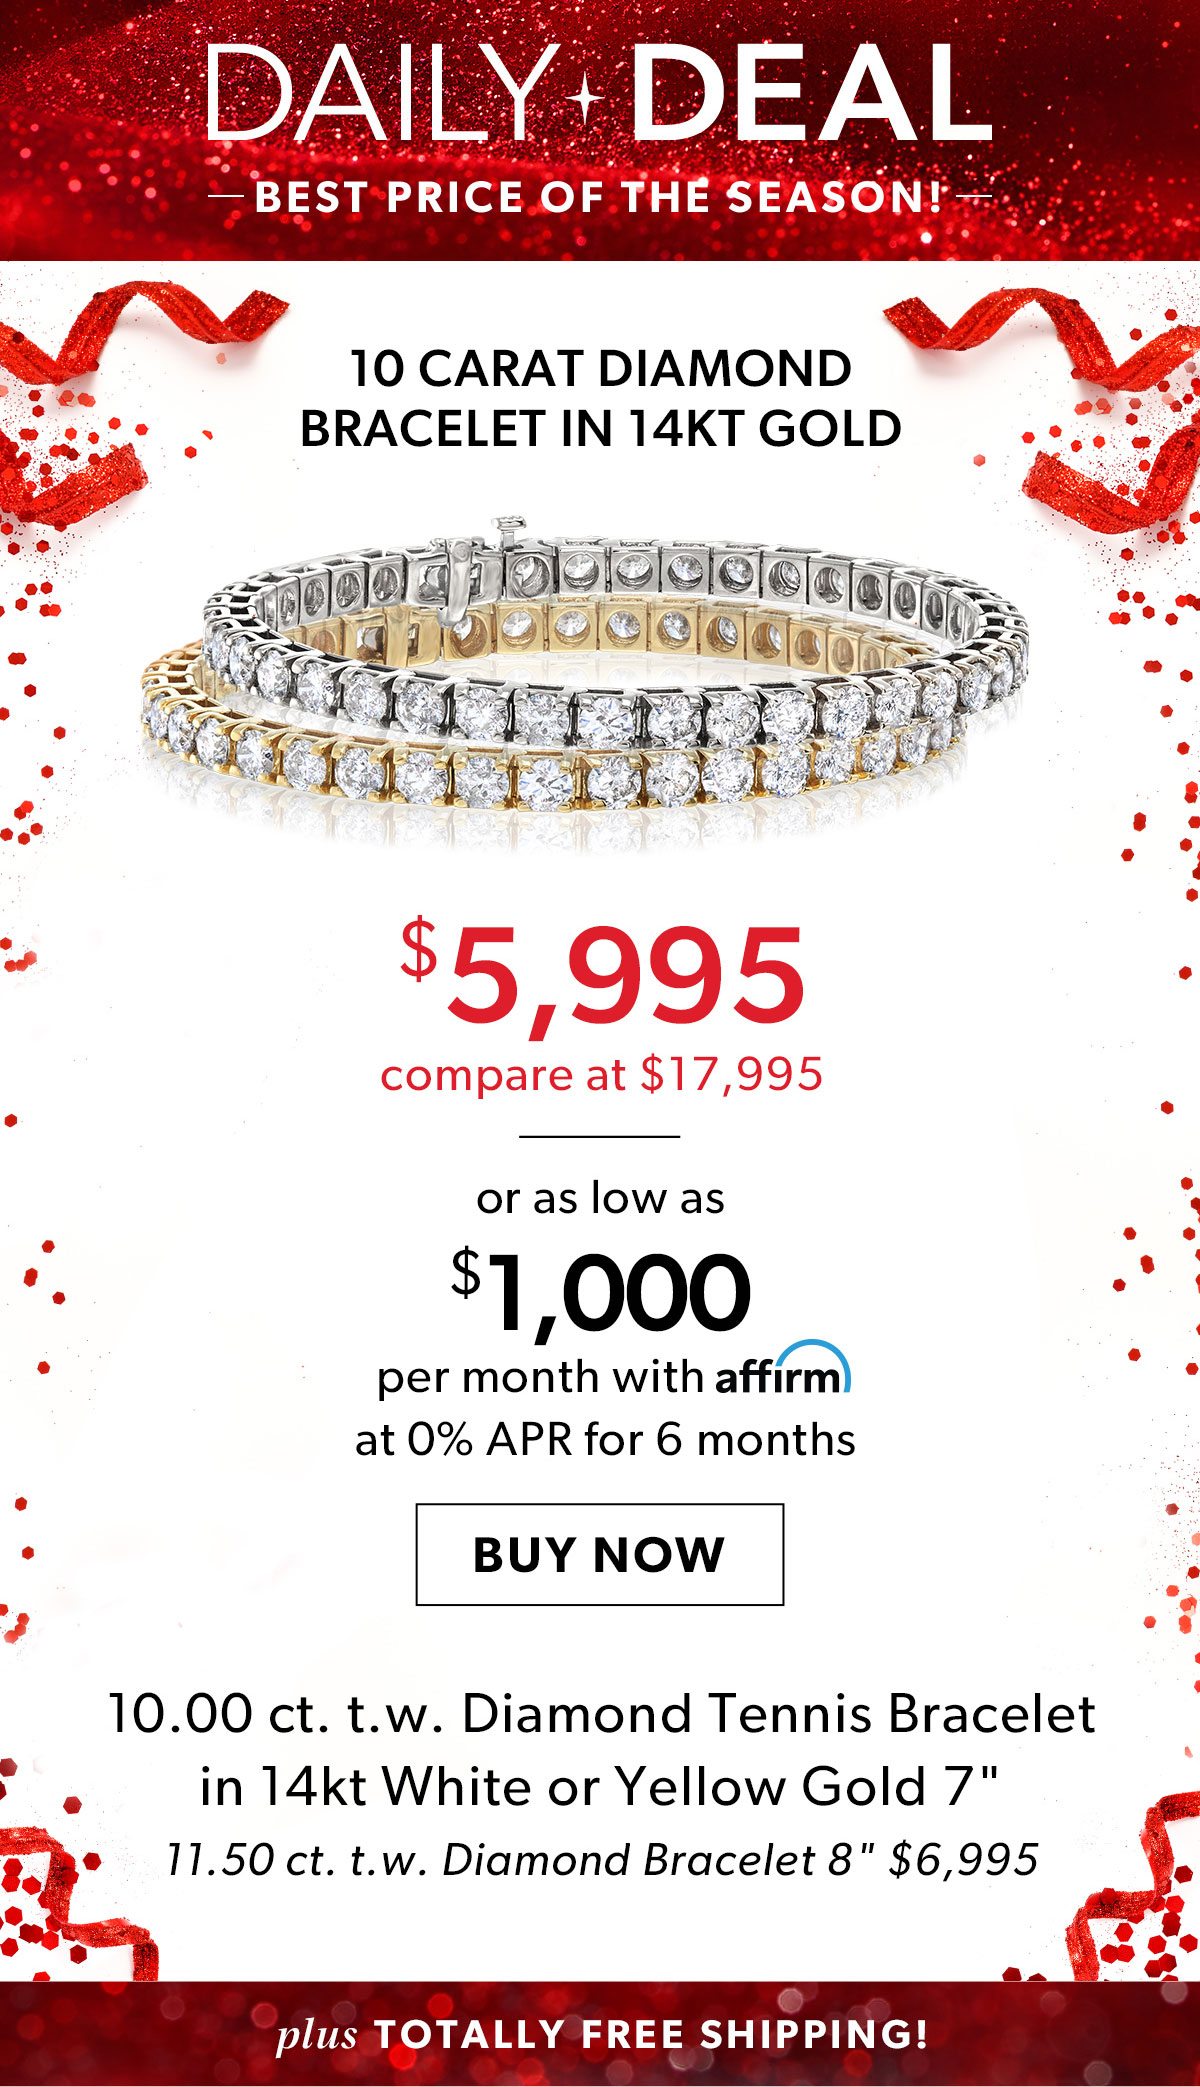 10 Carat Diamond Bracelet in 14kt Gold. $5,995. Buy Now